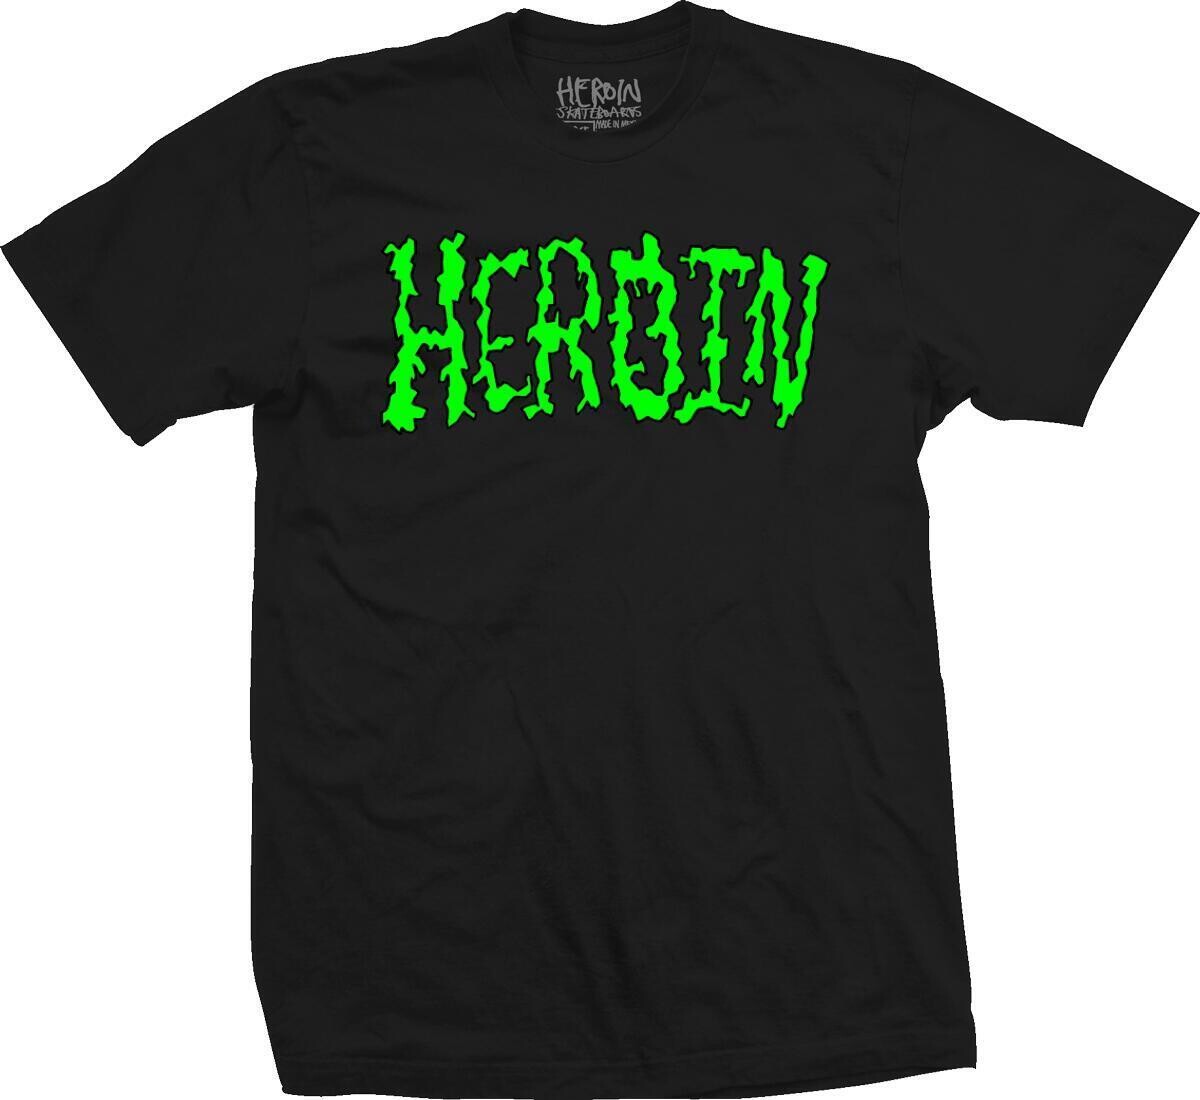 Heroin Dead Toons Black T-Shirt, Size: M